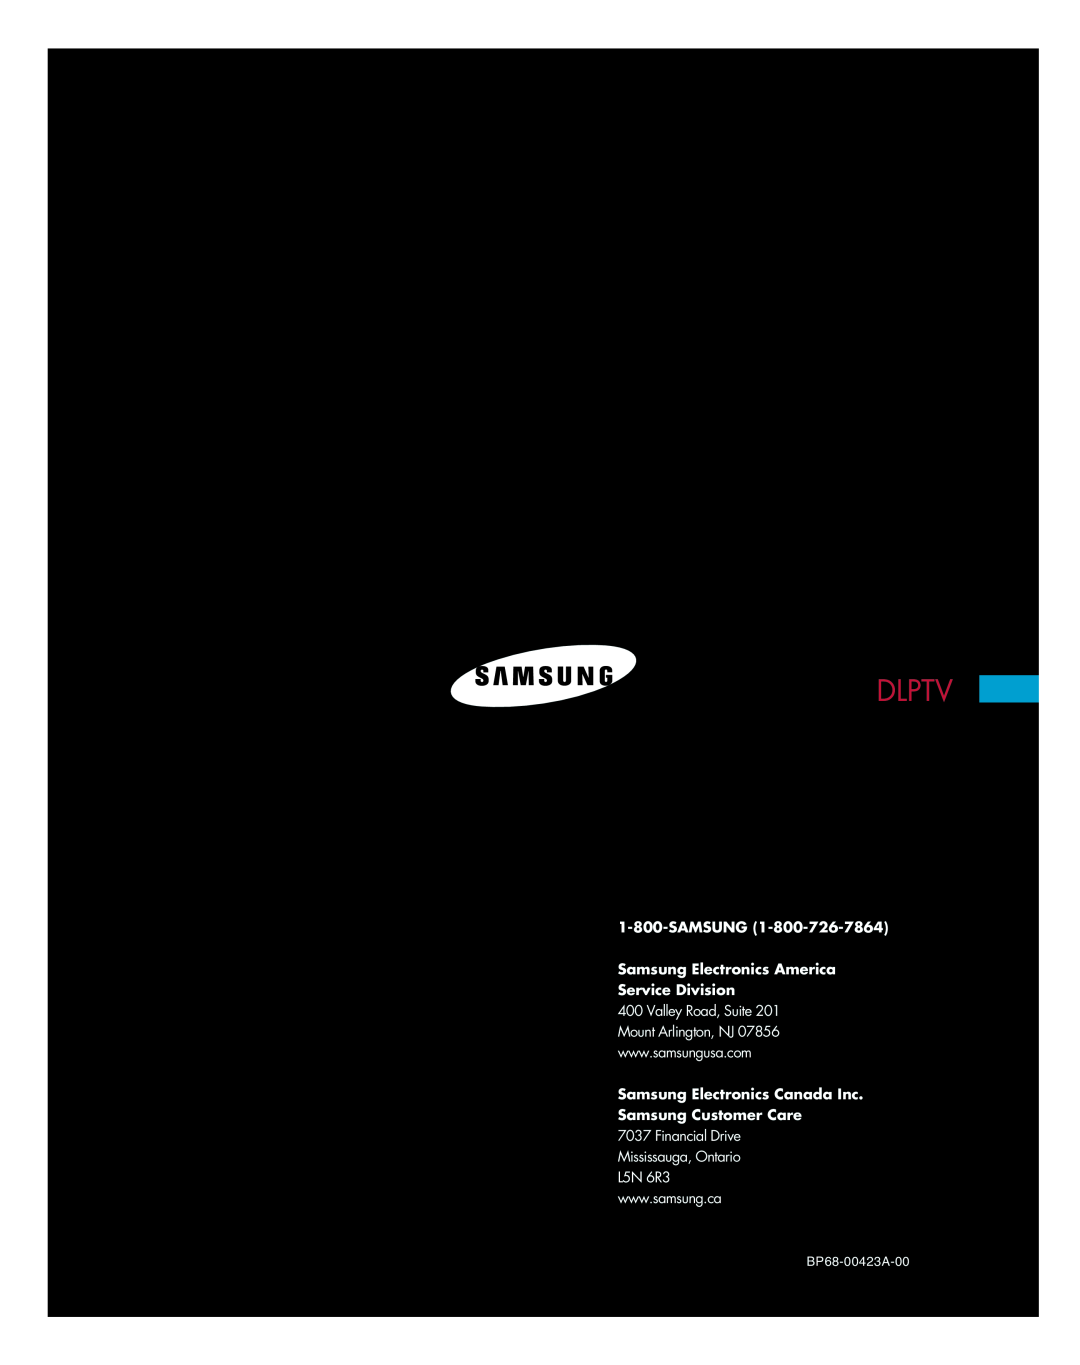 Samsung HL-P4674W instruction manual Dlptv, SAMSUNG Samsung Electronics America Service Division, BP68-00423A-00 